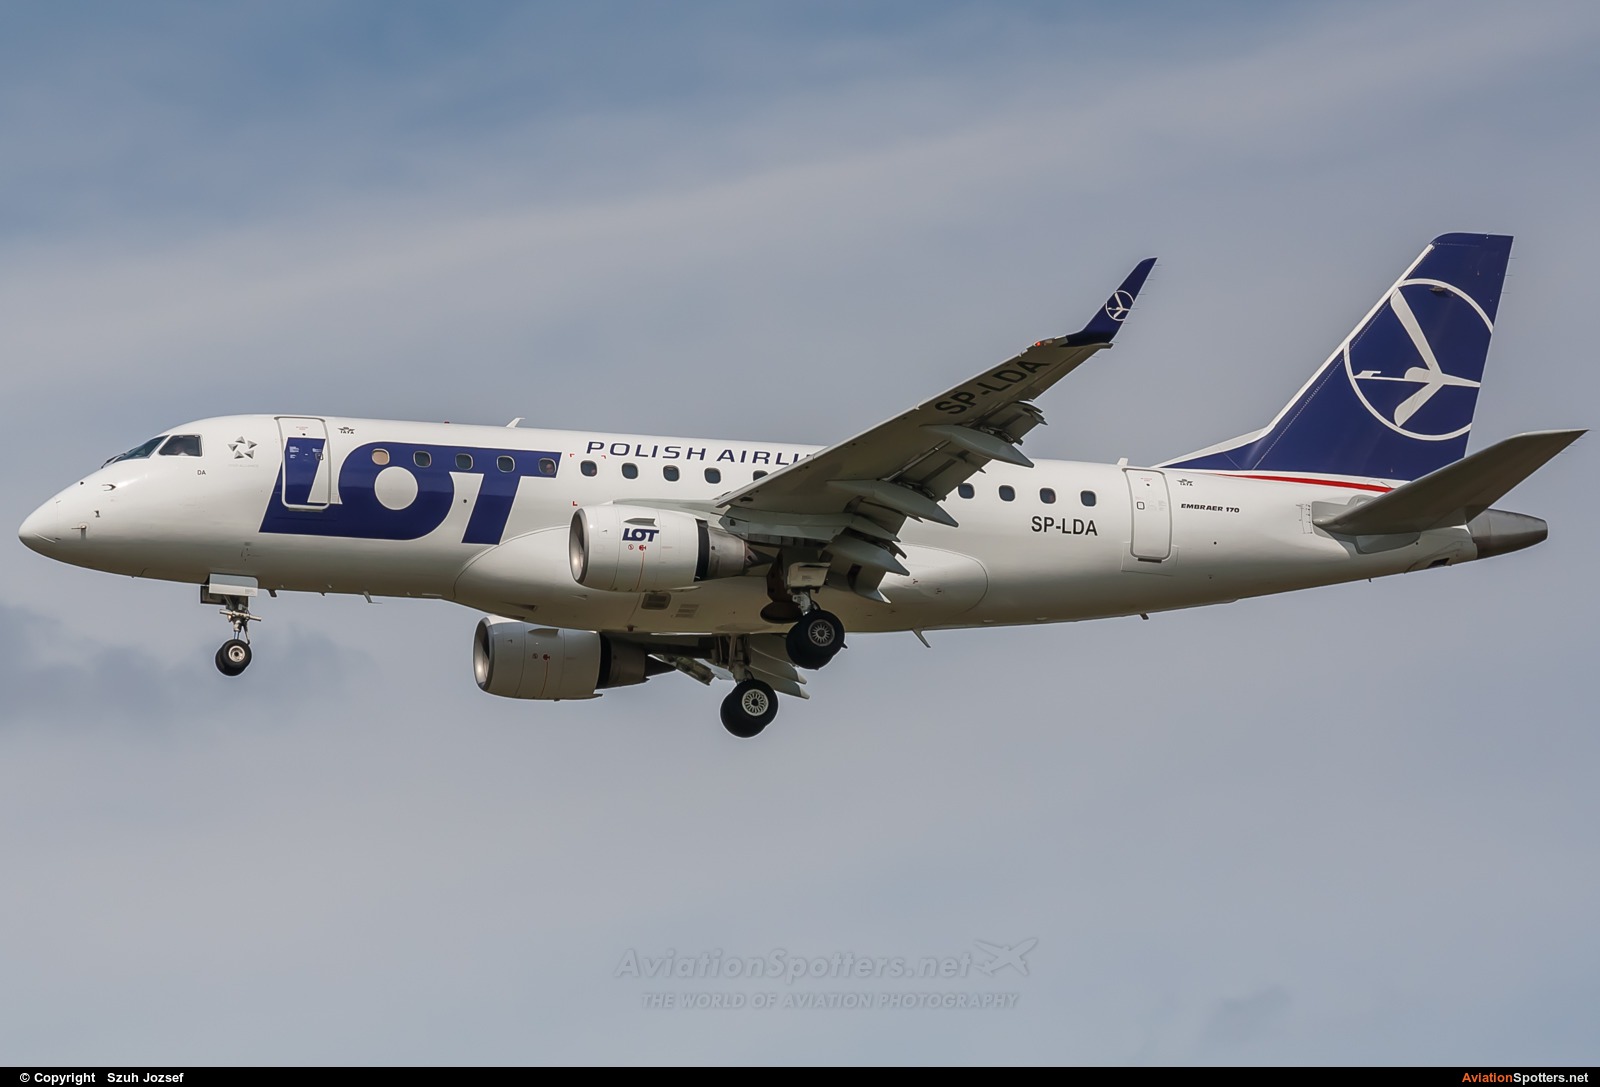 LOT - Polish Airlines  -  170  (SP-LDA) By Szuh Jozsef (szuh jozsef)